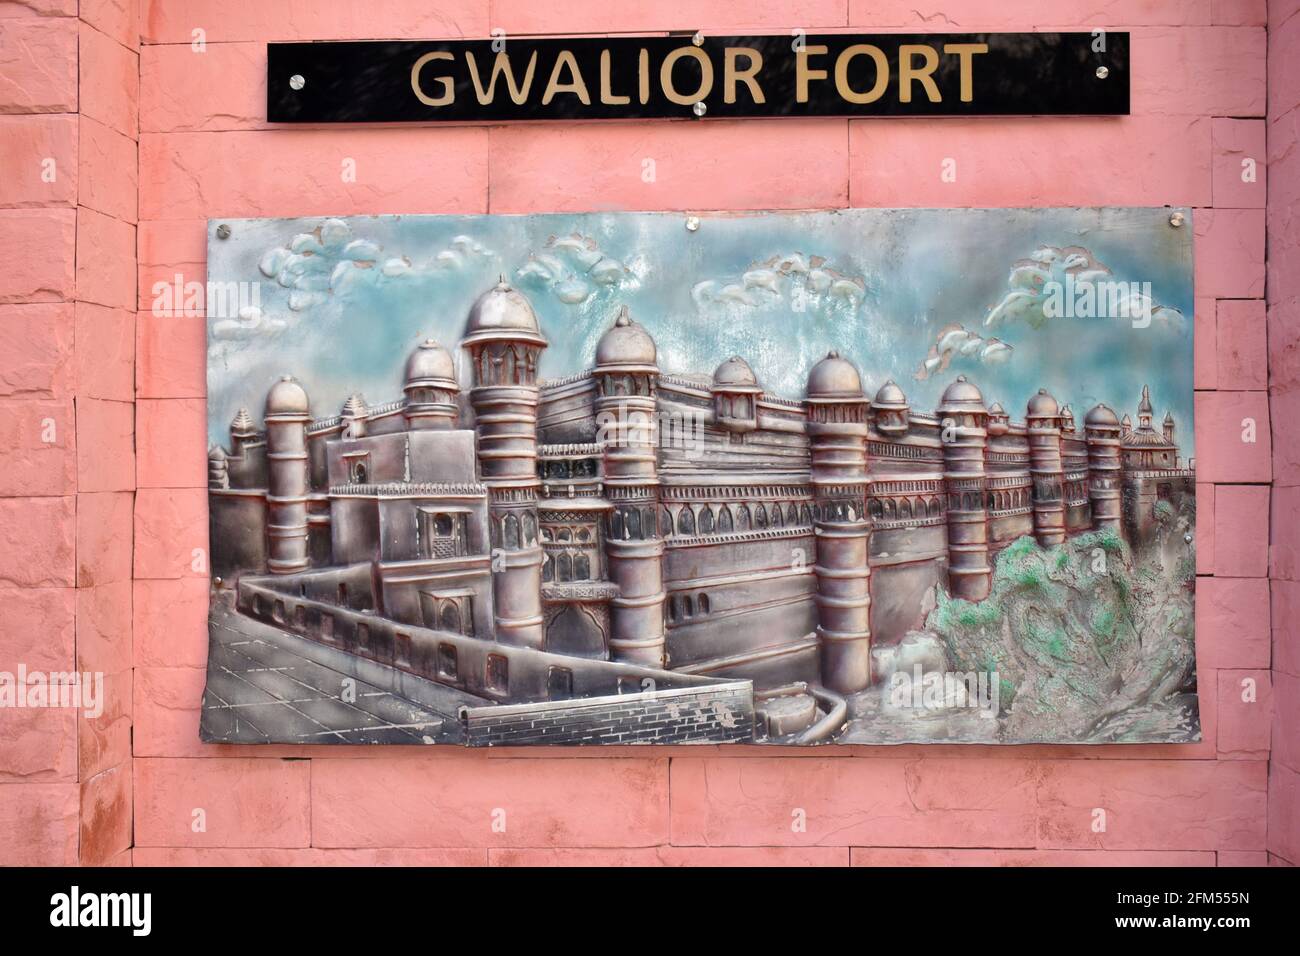 Gwalior Fort Sculpture muro rilievo a Museum - National War Memorial Southern Command Pune, Maharashtra, India Foto Stock